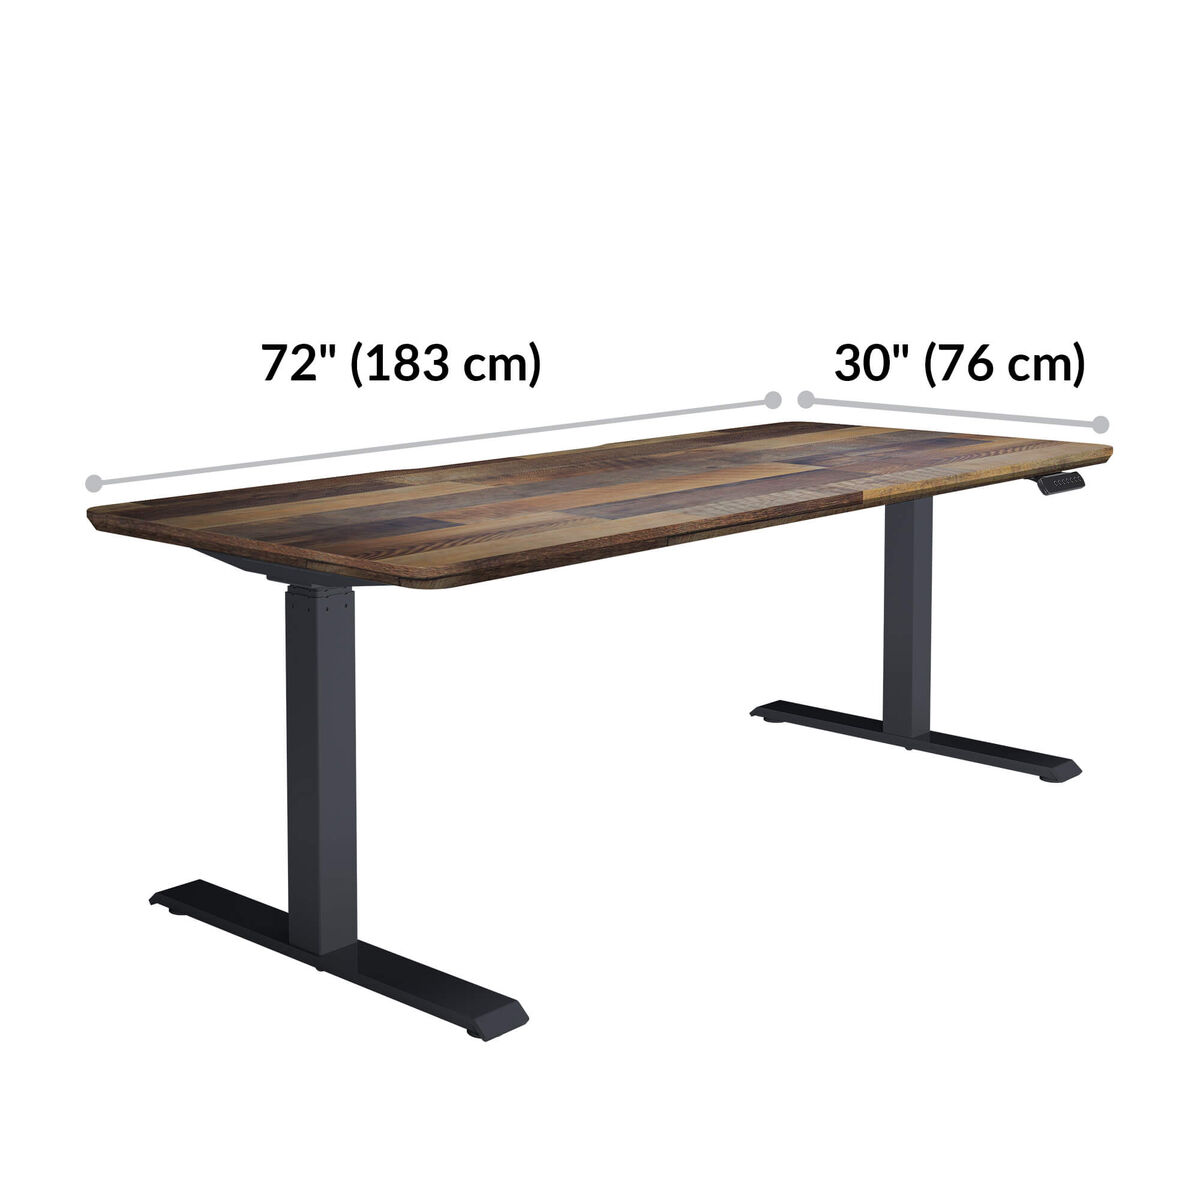 Electric Standing Desk 72x30 | Height Adjustable Electric Desk | Vari®